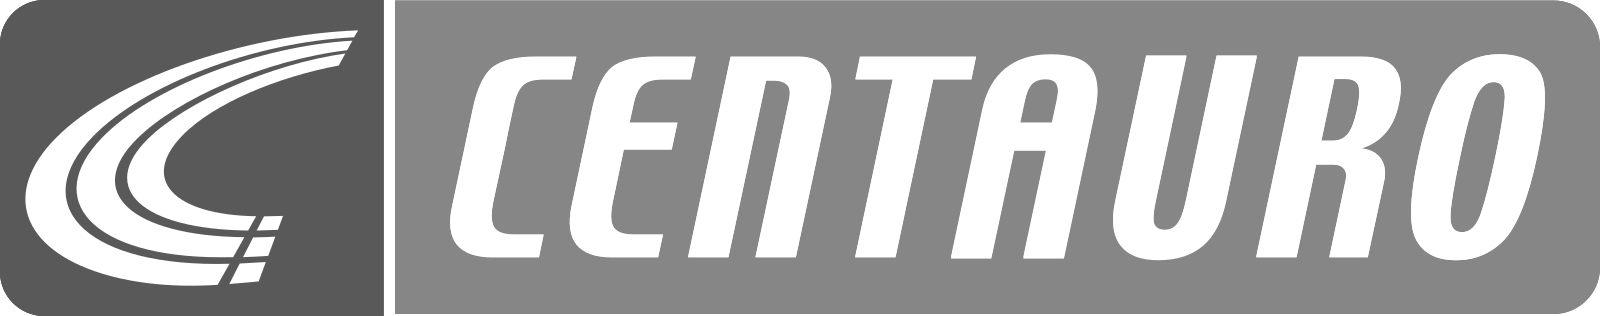 centauro-logo-2.png